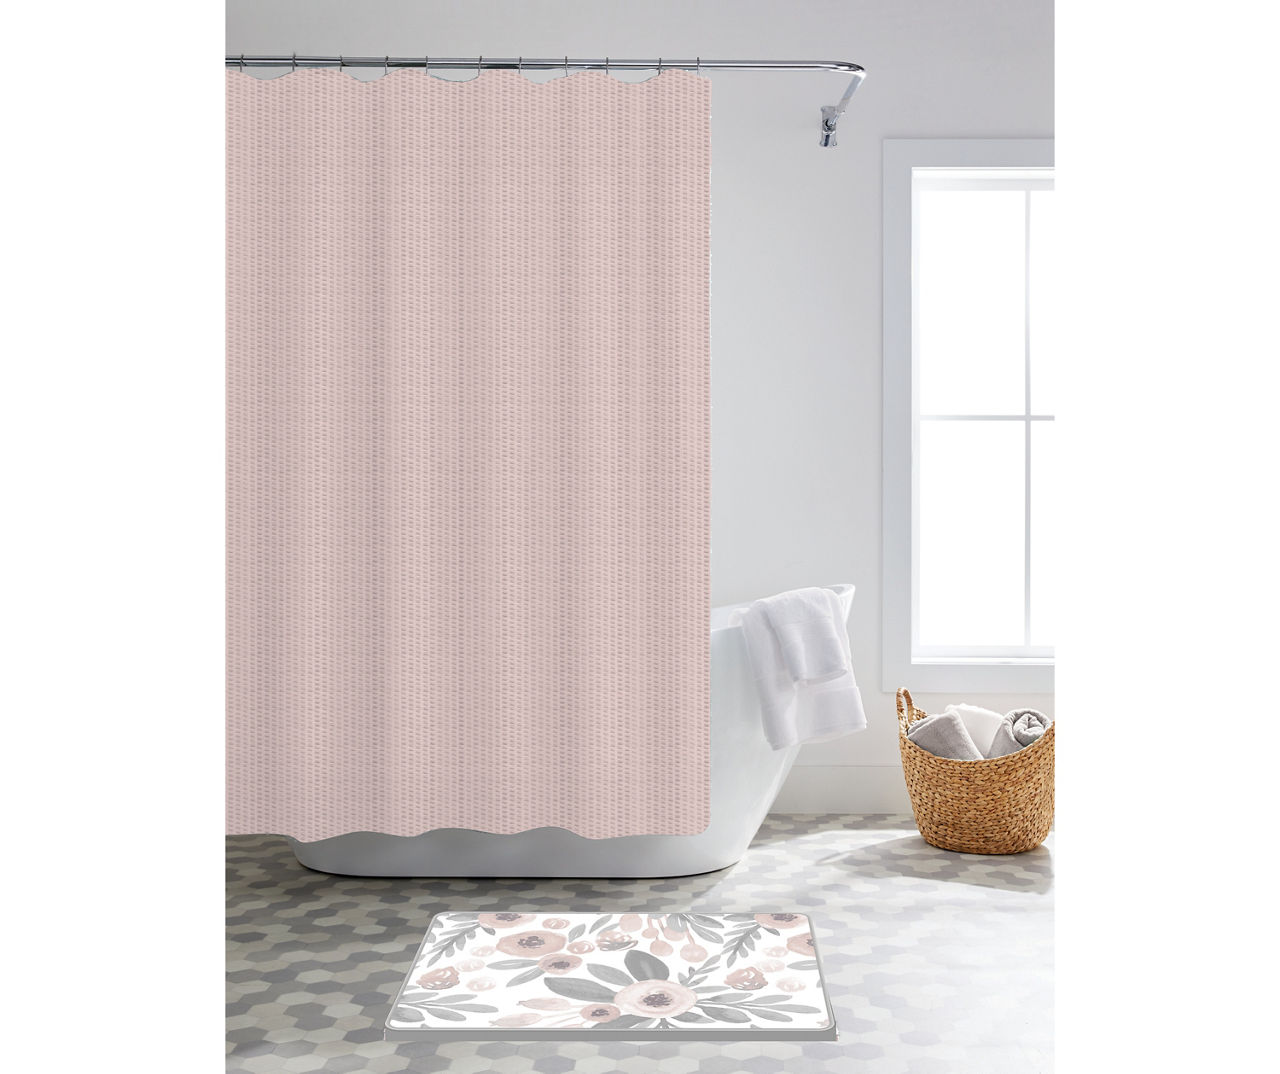 Bathroom Sets with Shower Curtain and Rugs  Bathroom shower curtain sets, Brown  shower curtain, Contemporary bathroom decor